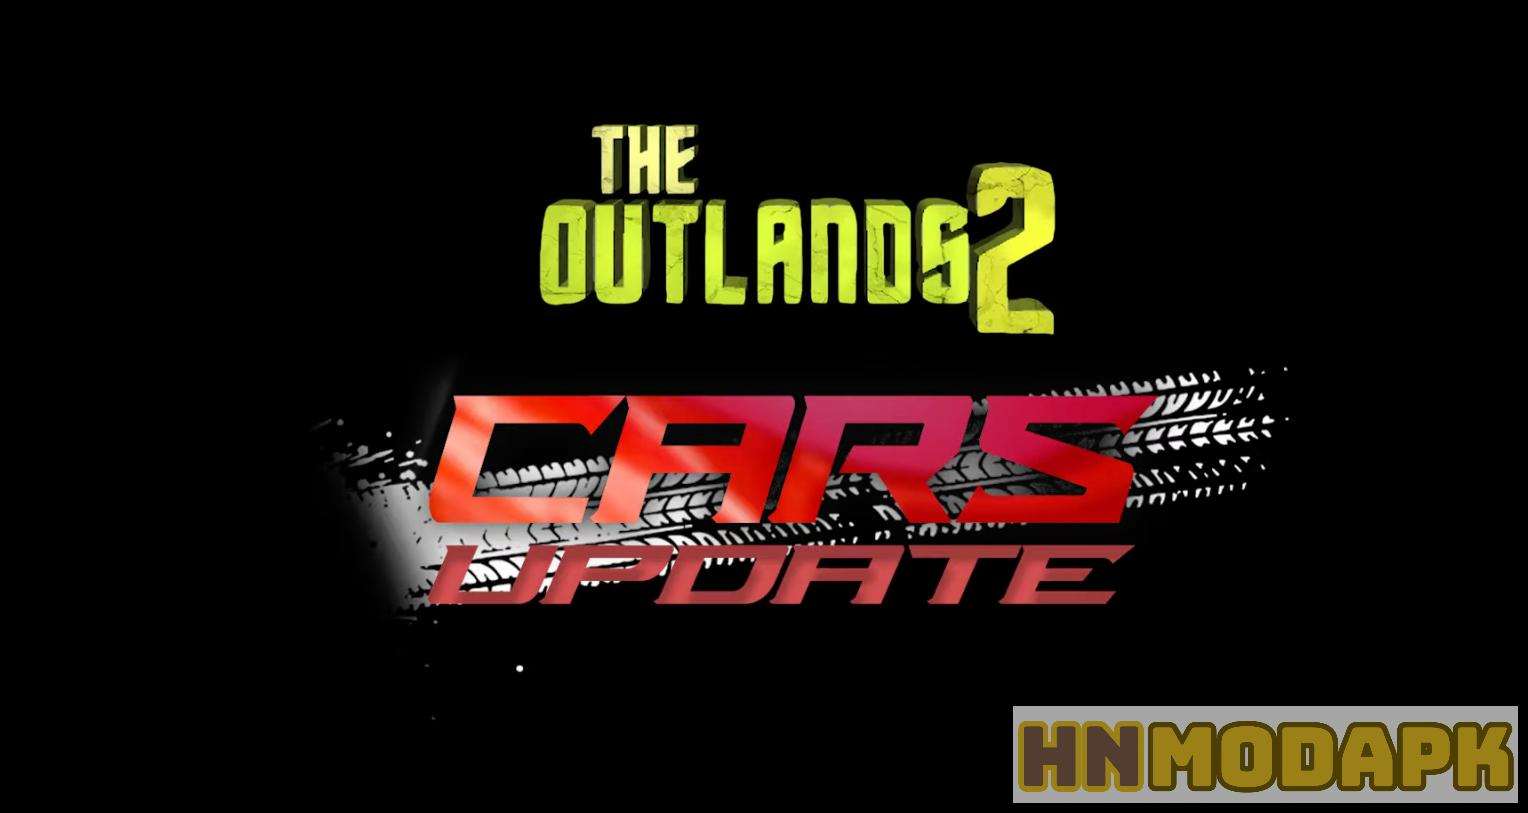 The Outlands 2 Zombie Survival MOD (Menu Pro, Tất Cả Vũ Khí, Phần Thưởng Giá Trị) APK 1.2.920